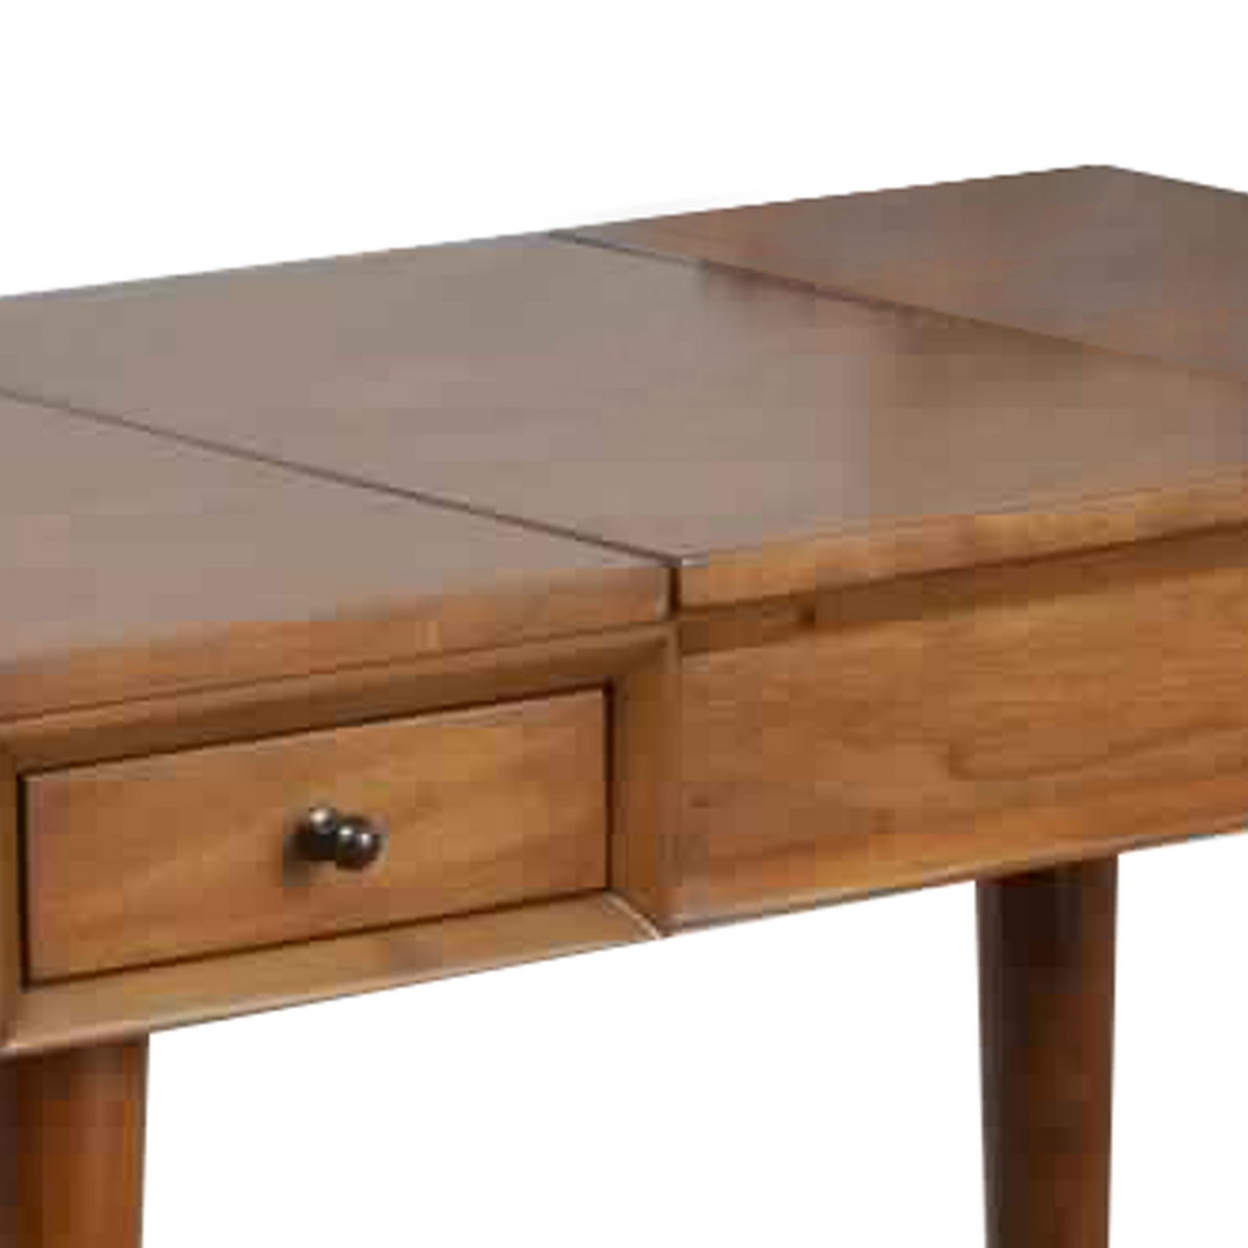 2 Drawer Vanity Desk With Flip Top Mirror And Storage Compartment, Brown- Saltoro Sherpi